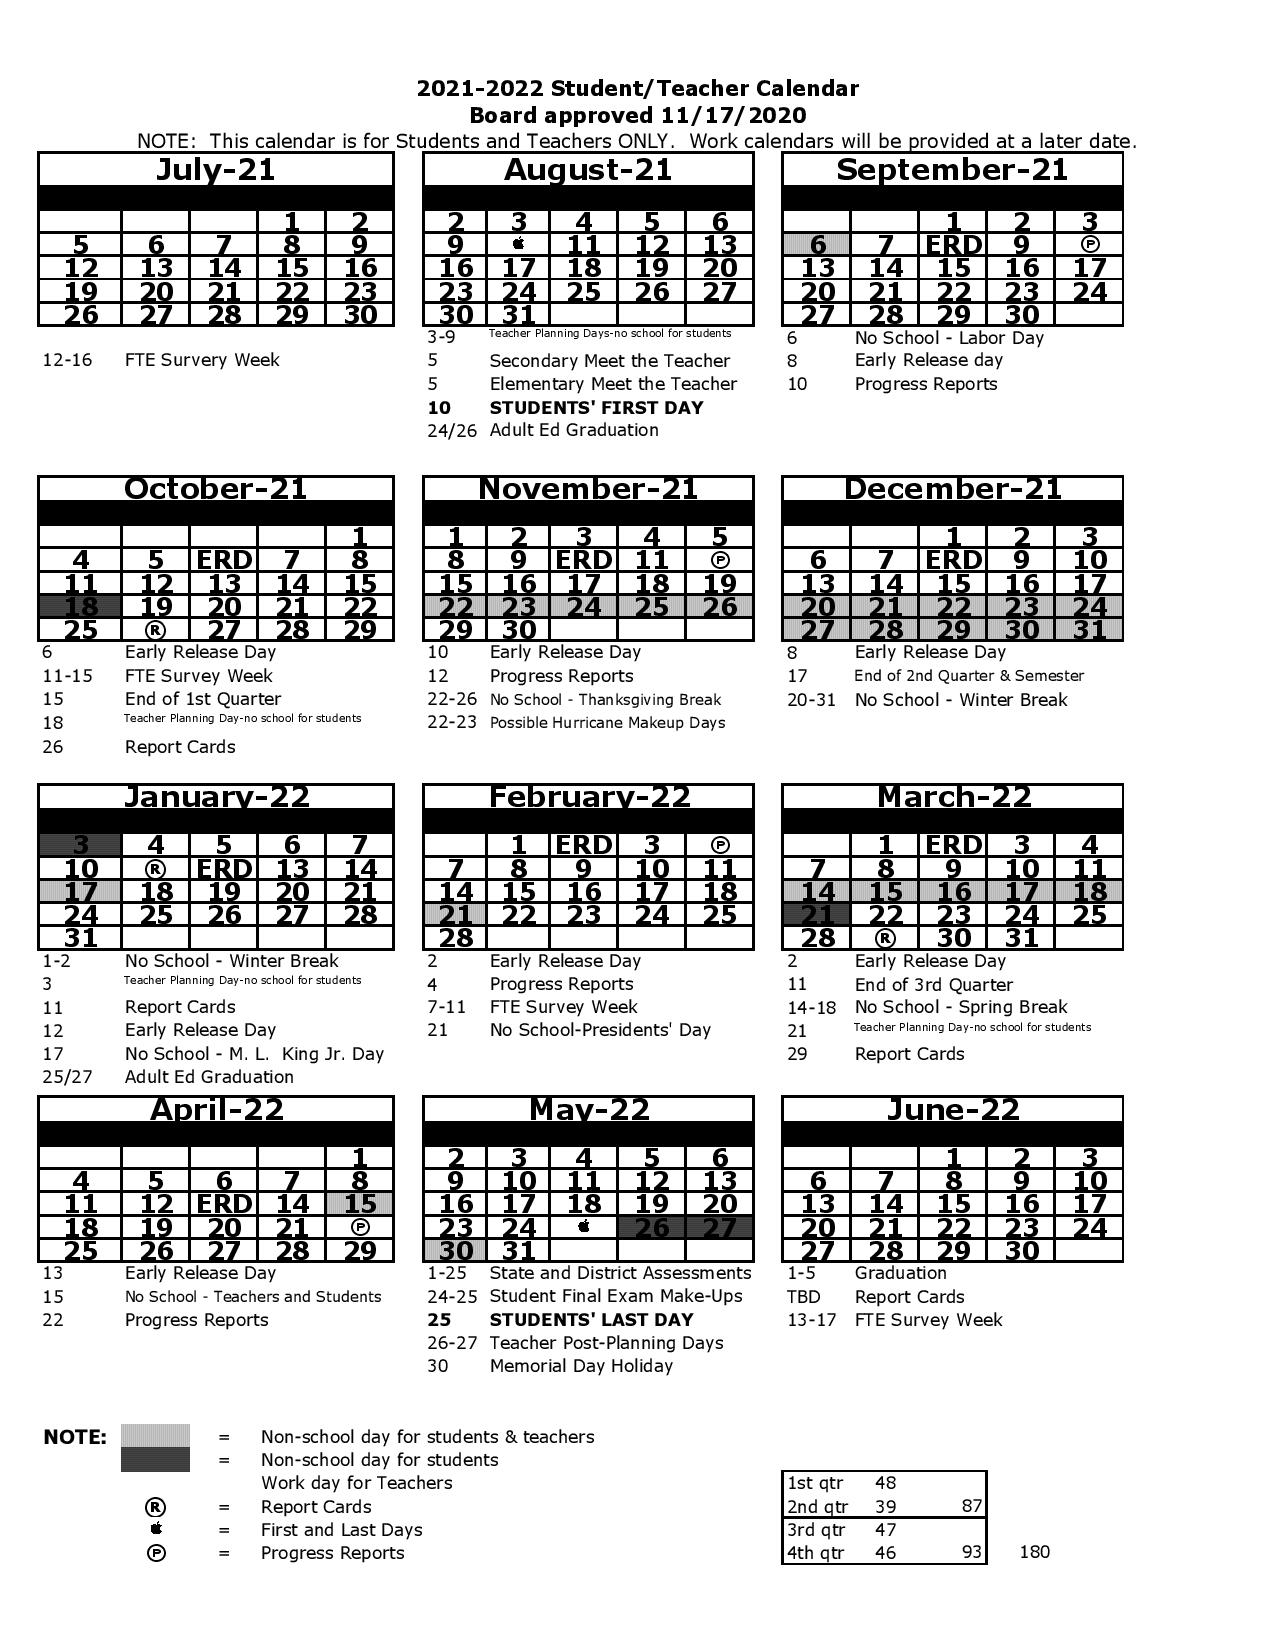 Pasco County School Calendar 20212022 in PDF